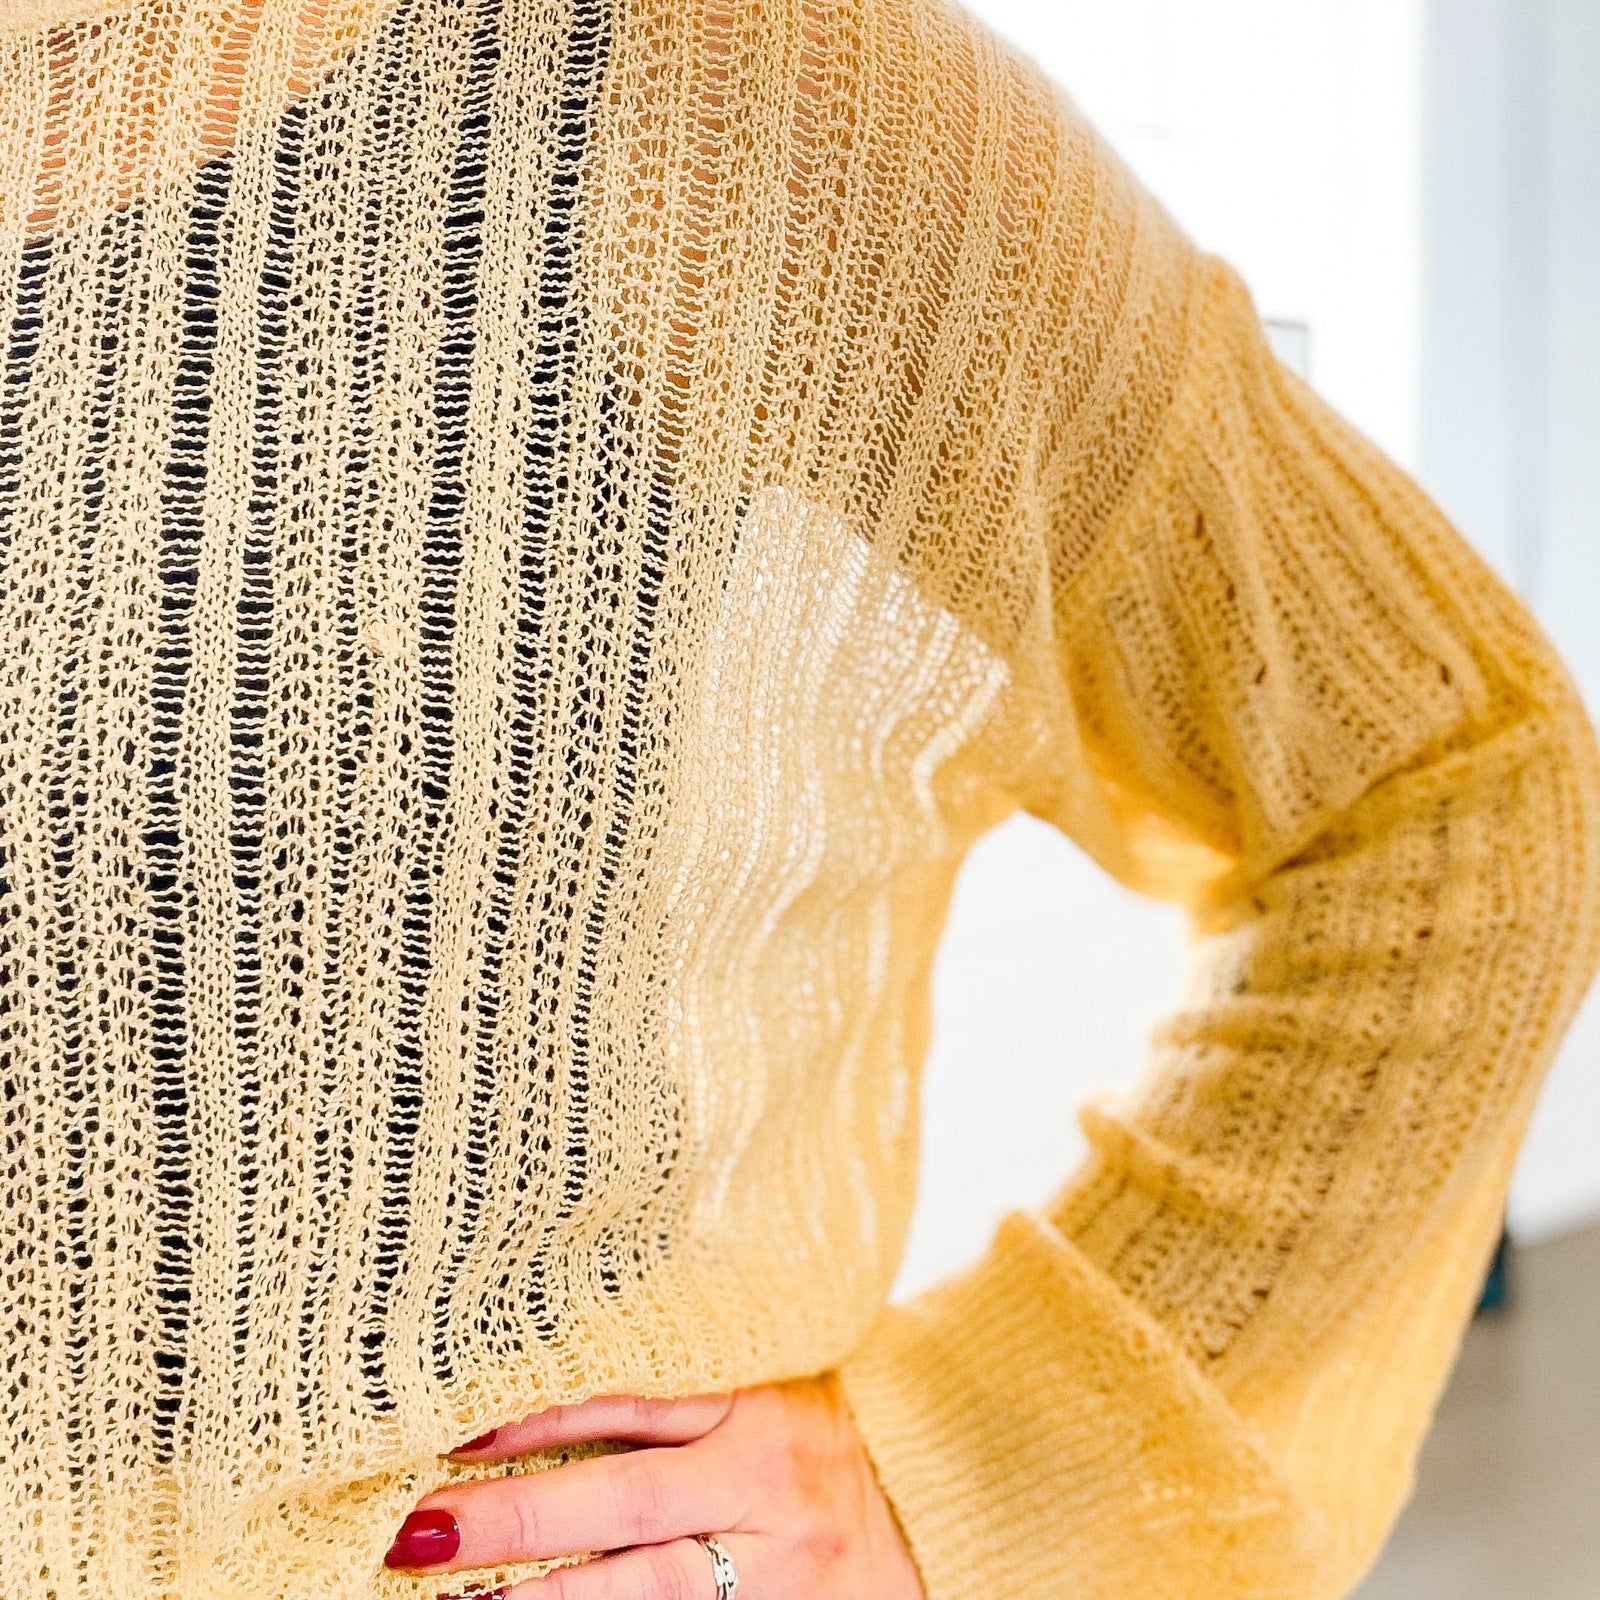 Larissa Loose Knit Sweater in Pineapple